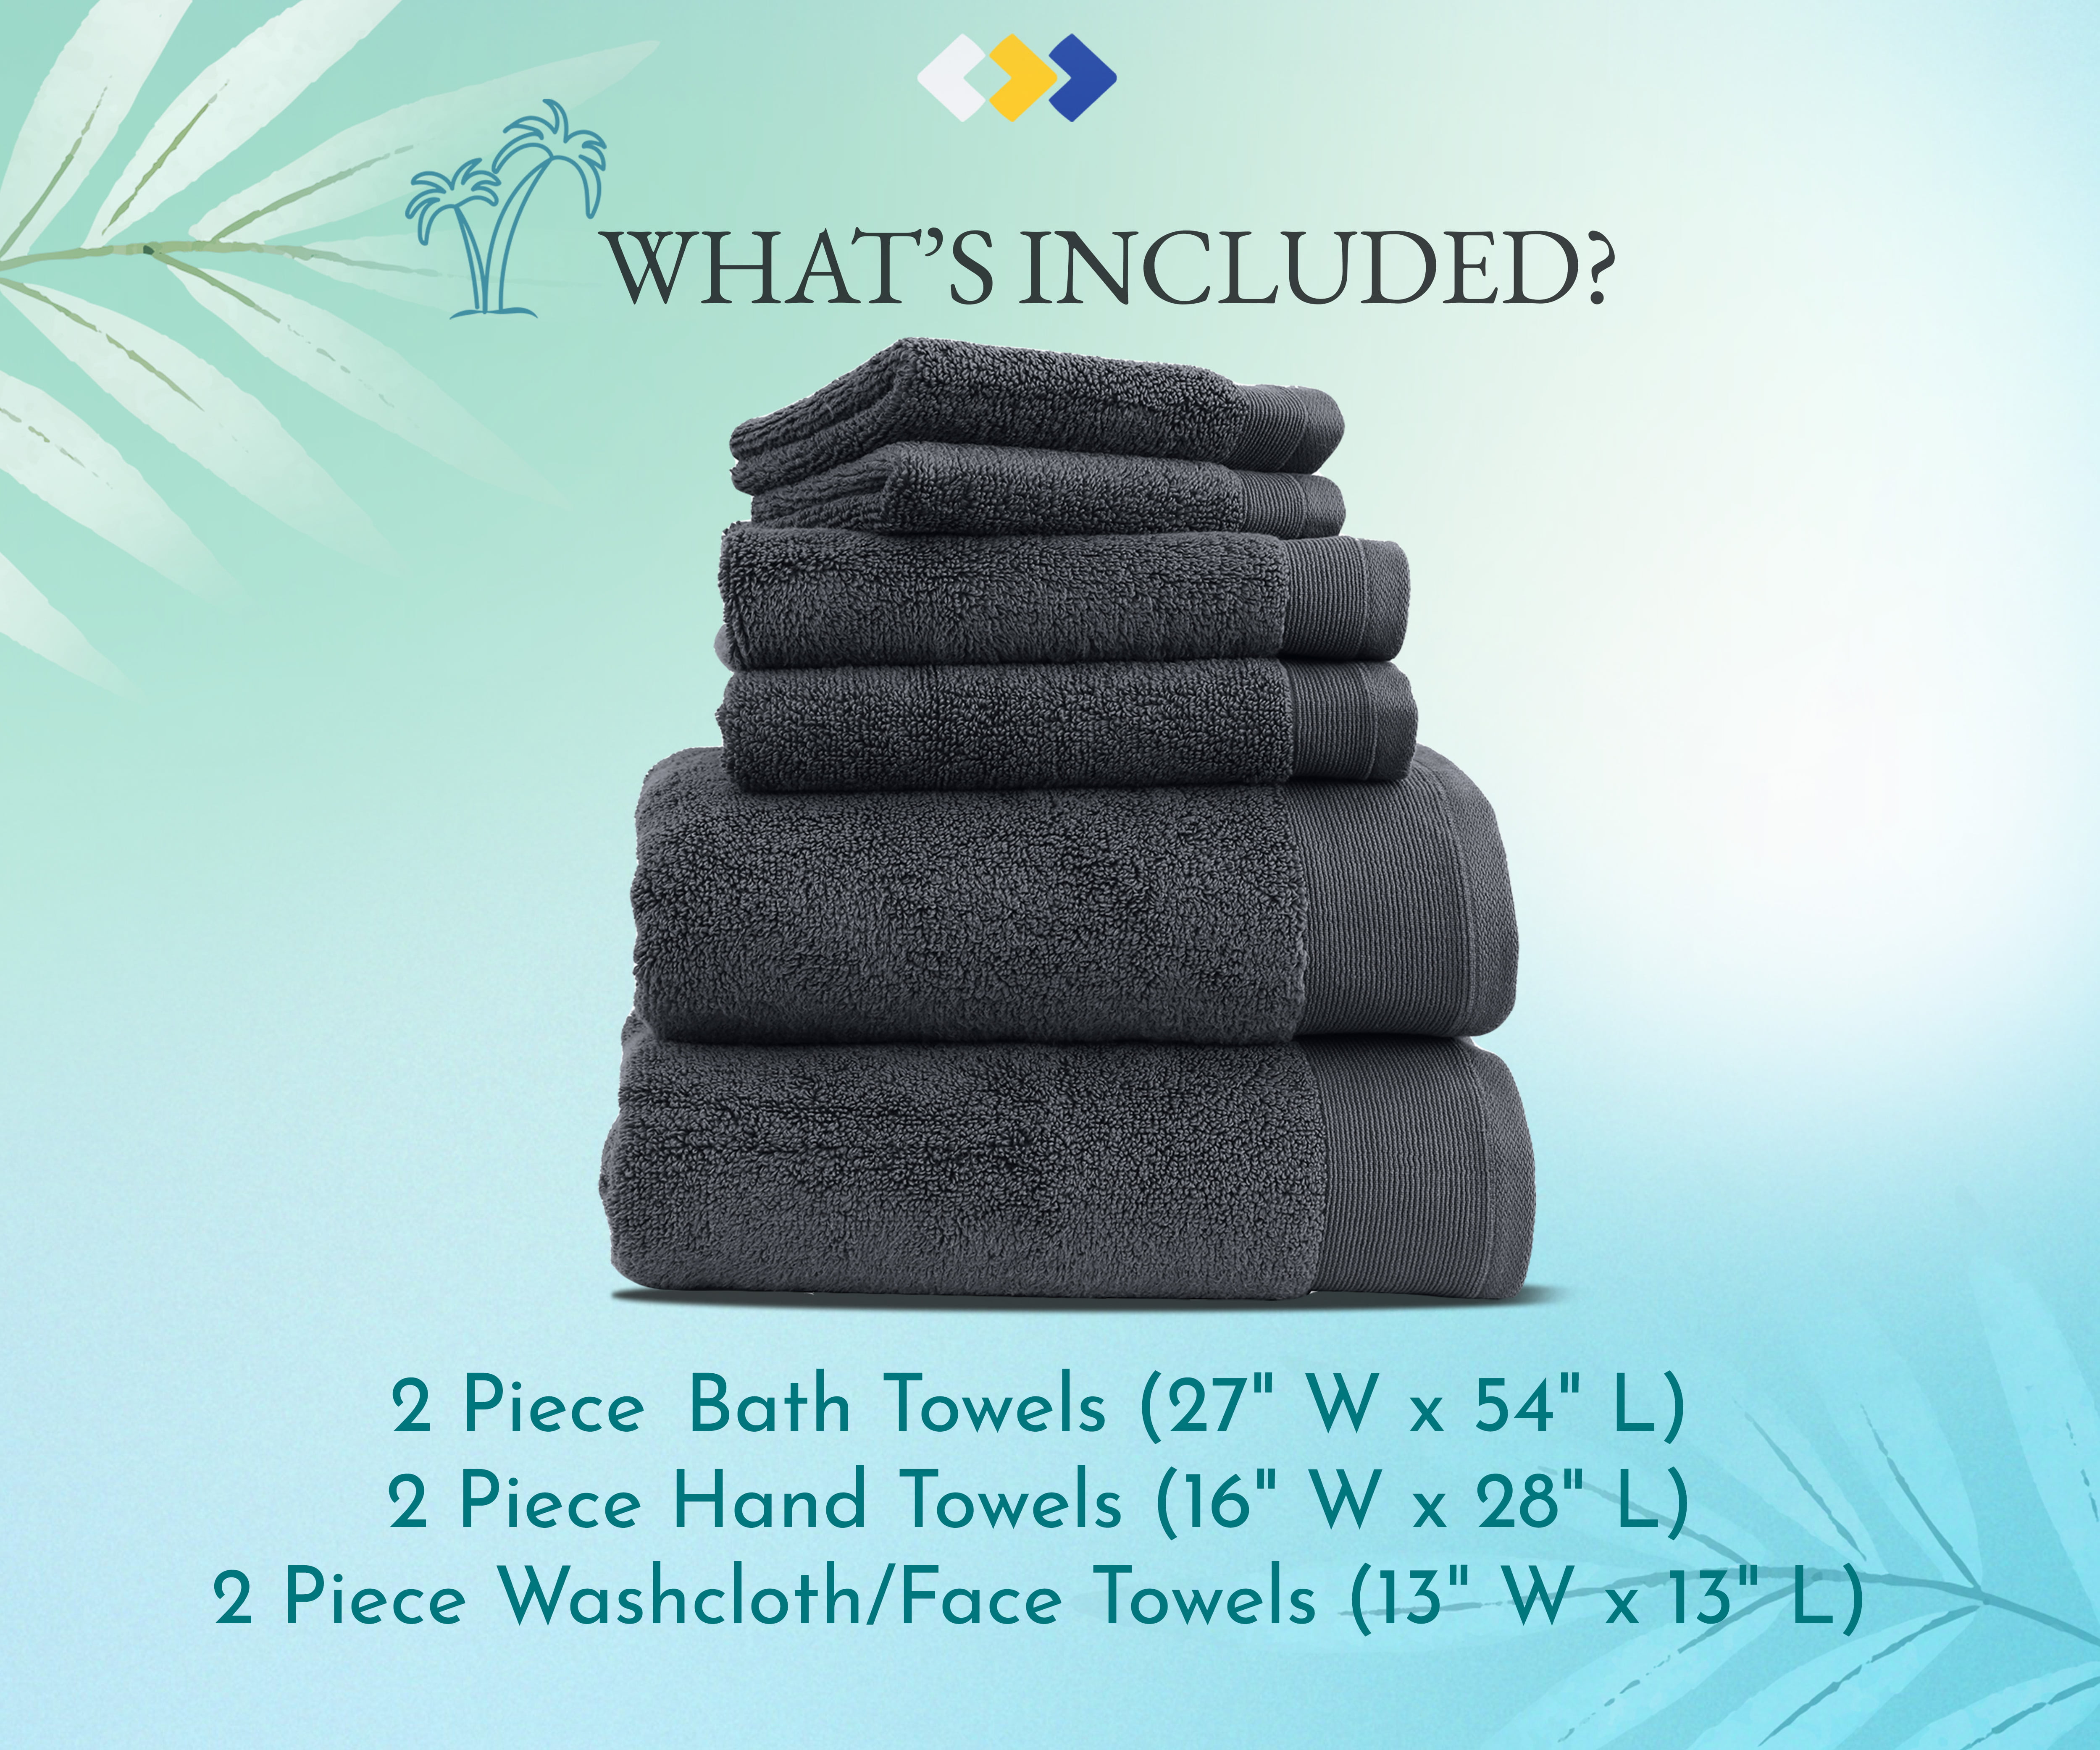 UGG 21258 Pasha Cotton Bath Towel Ultra-Soft Fluffy Luxury Highly Absorbent  Spa-Like Hotel Luxurious Machine Washable Towel, Bath 54 x 30-inch, Birch